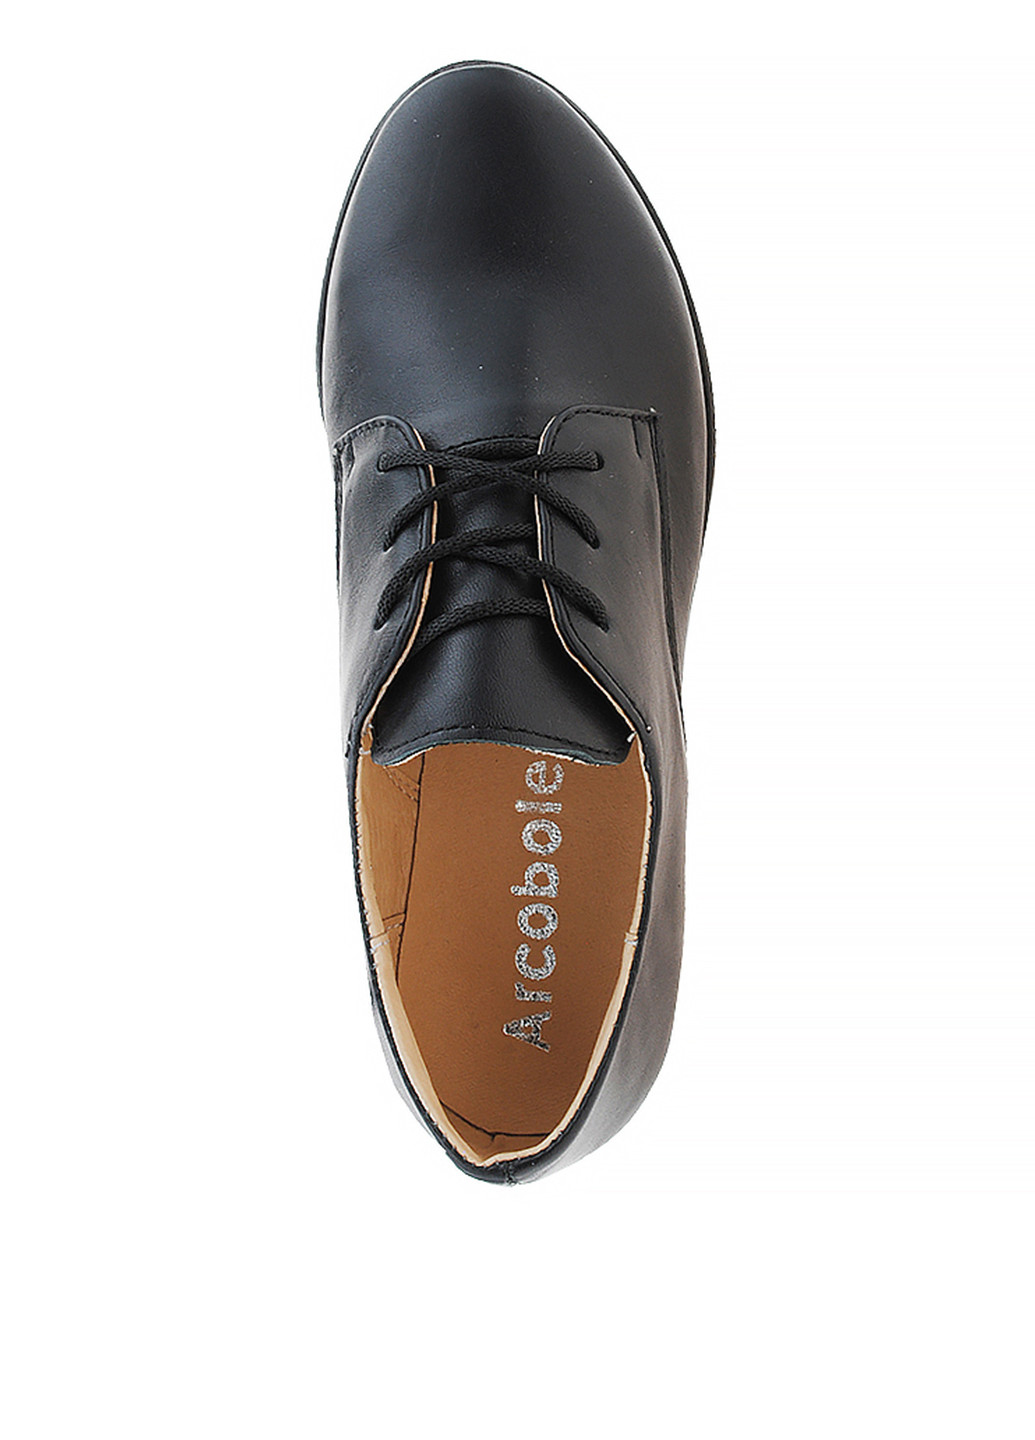 Черные туфли на низком каблуке Arcoboletto